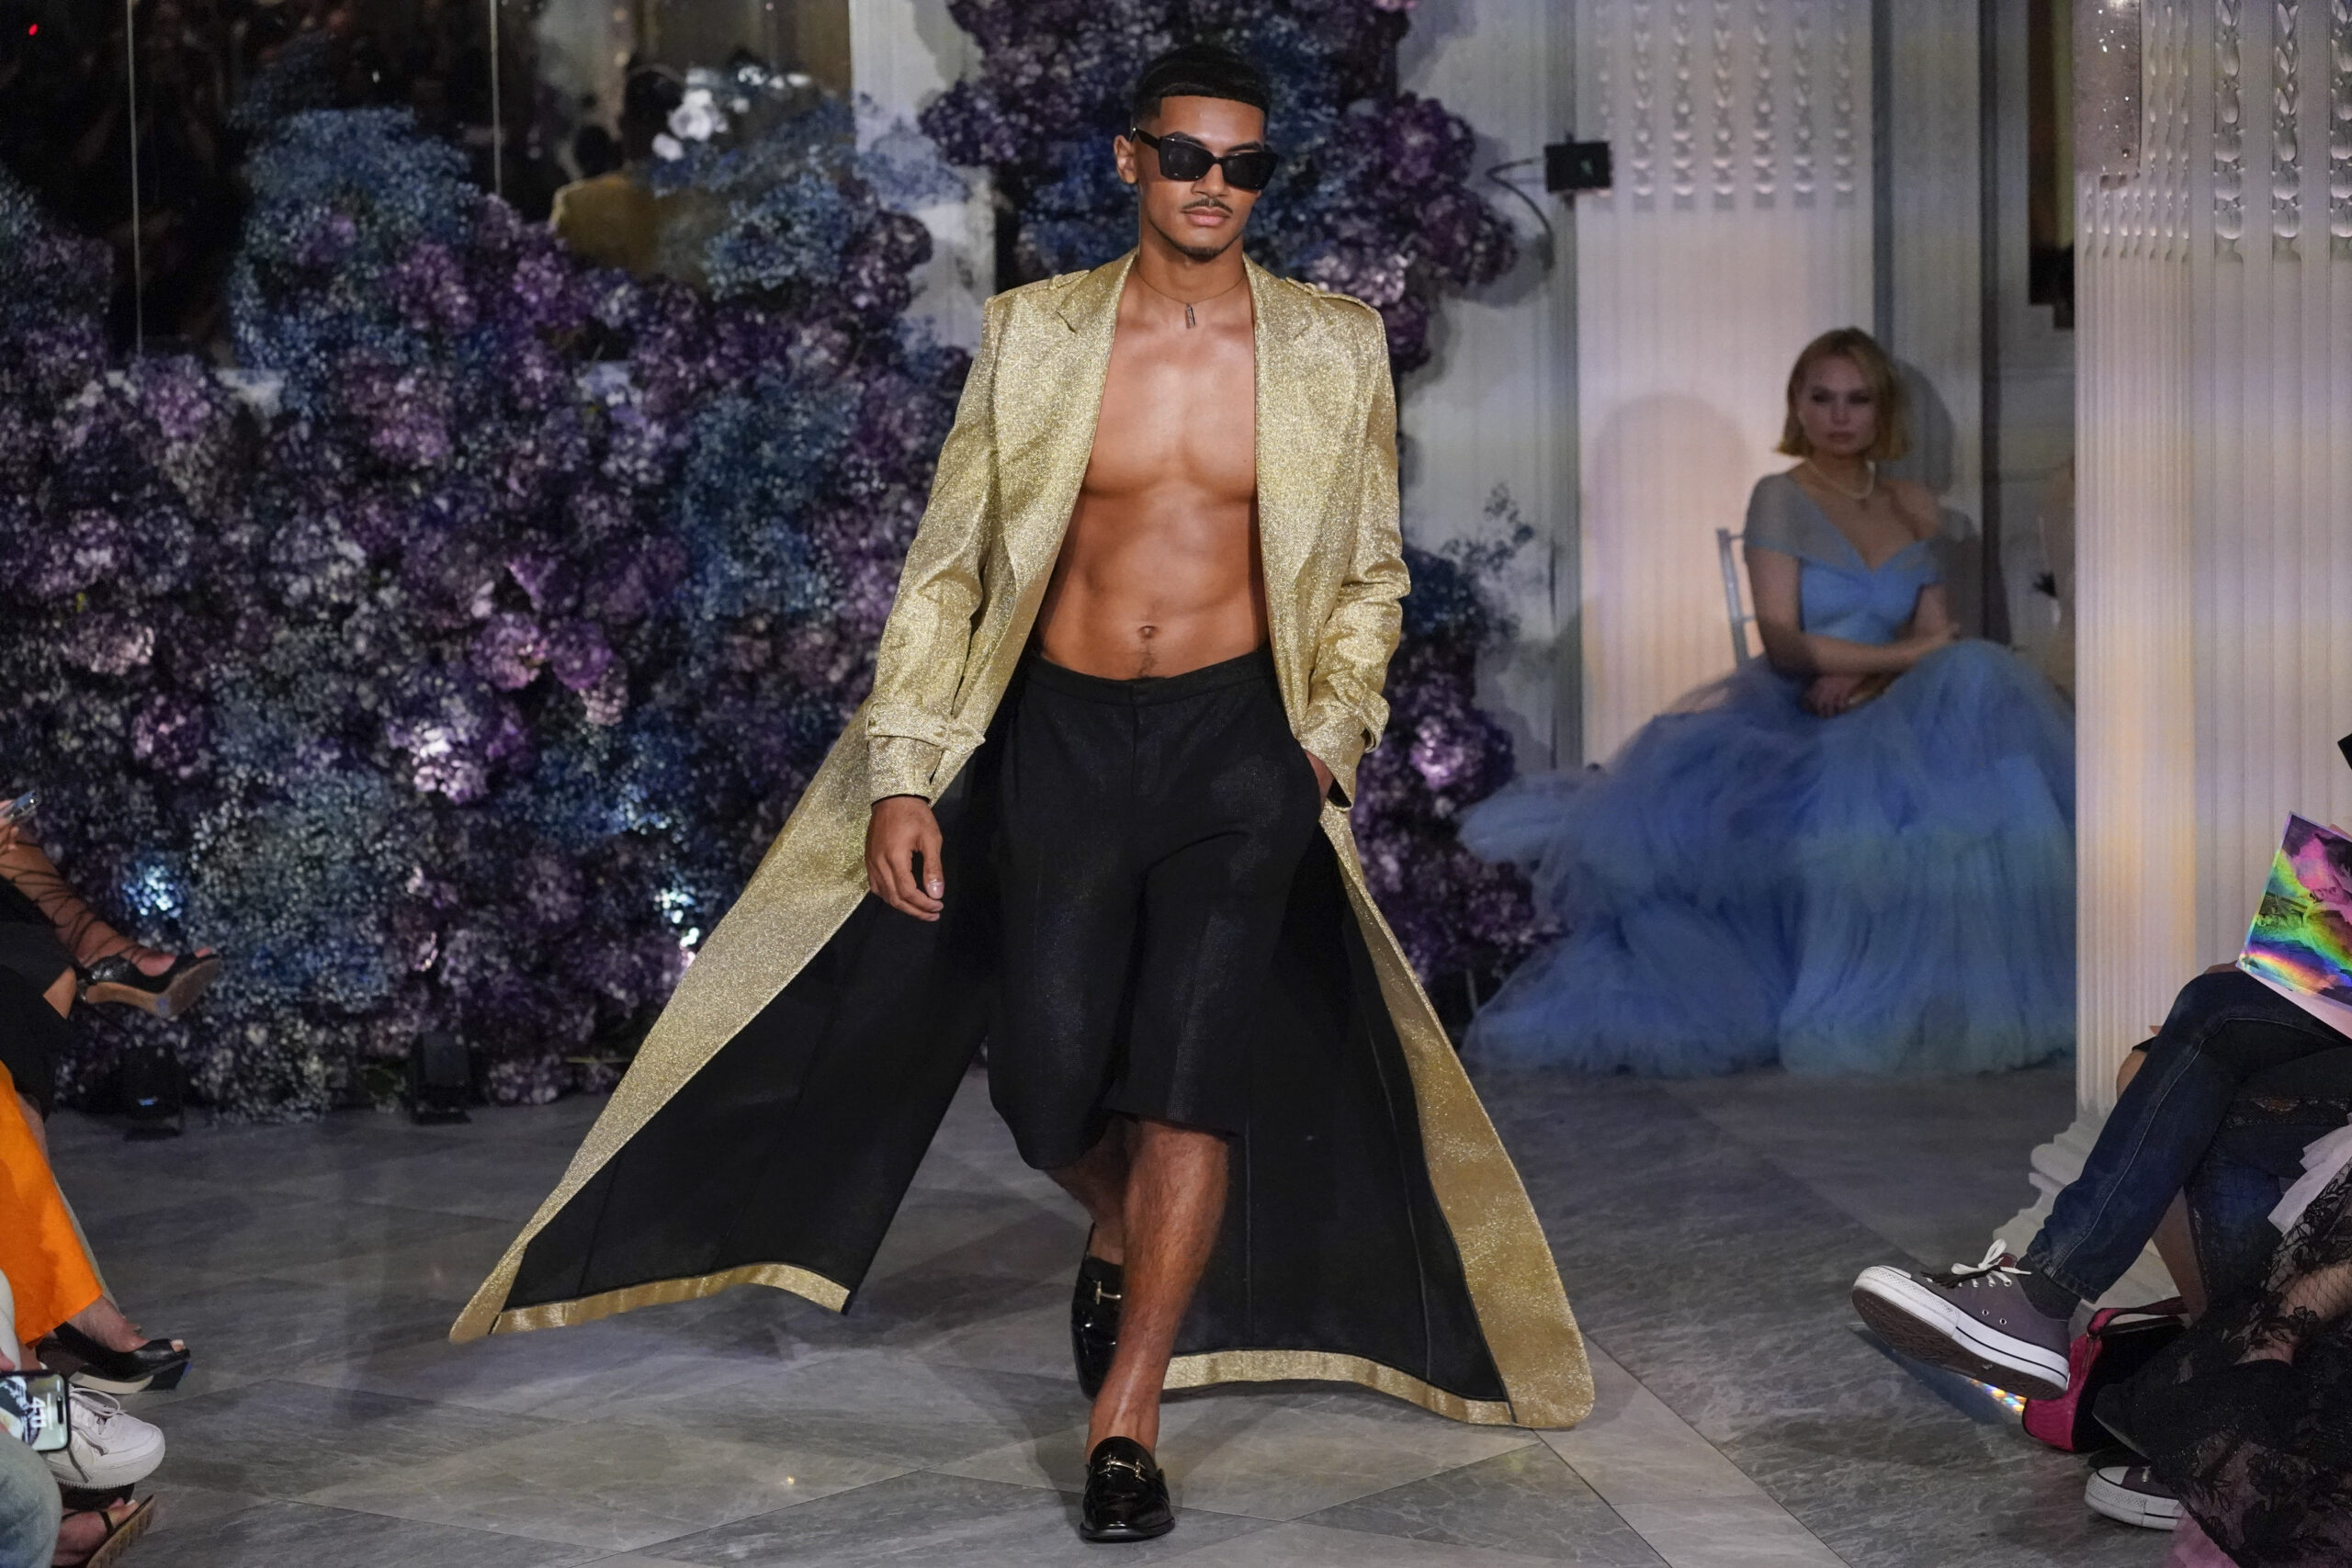 Christian Siriano celebrates 15 years in fashion business